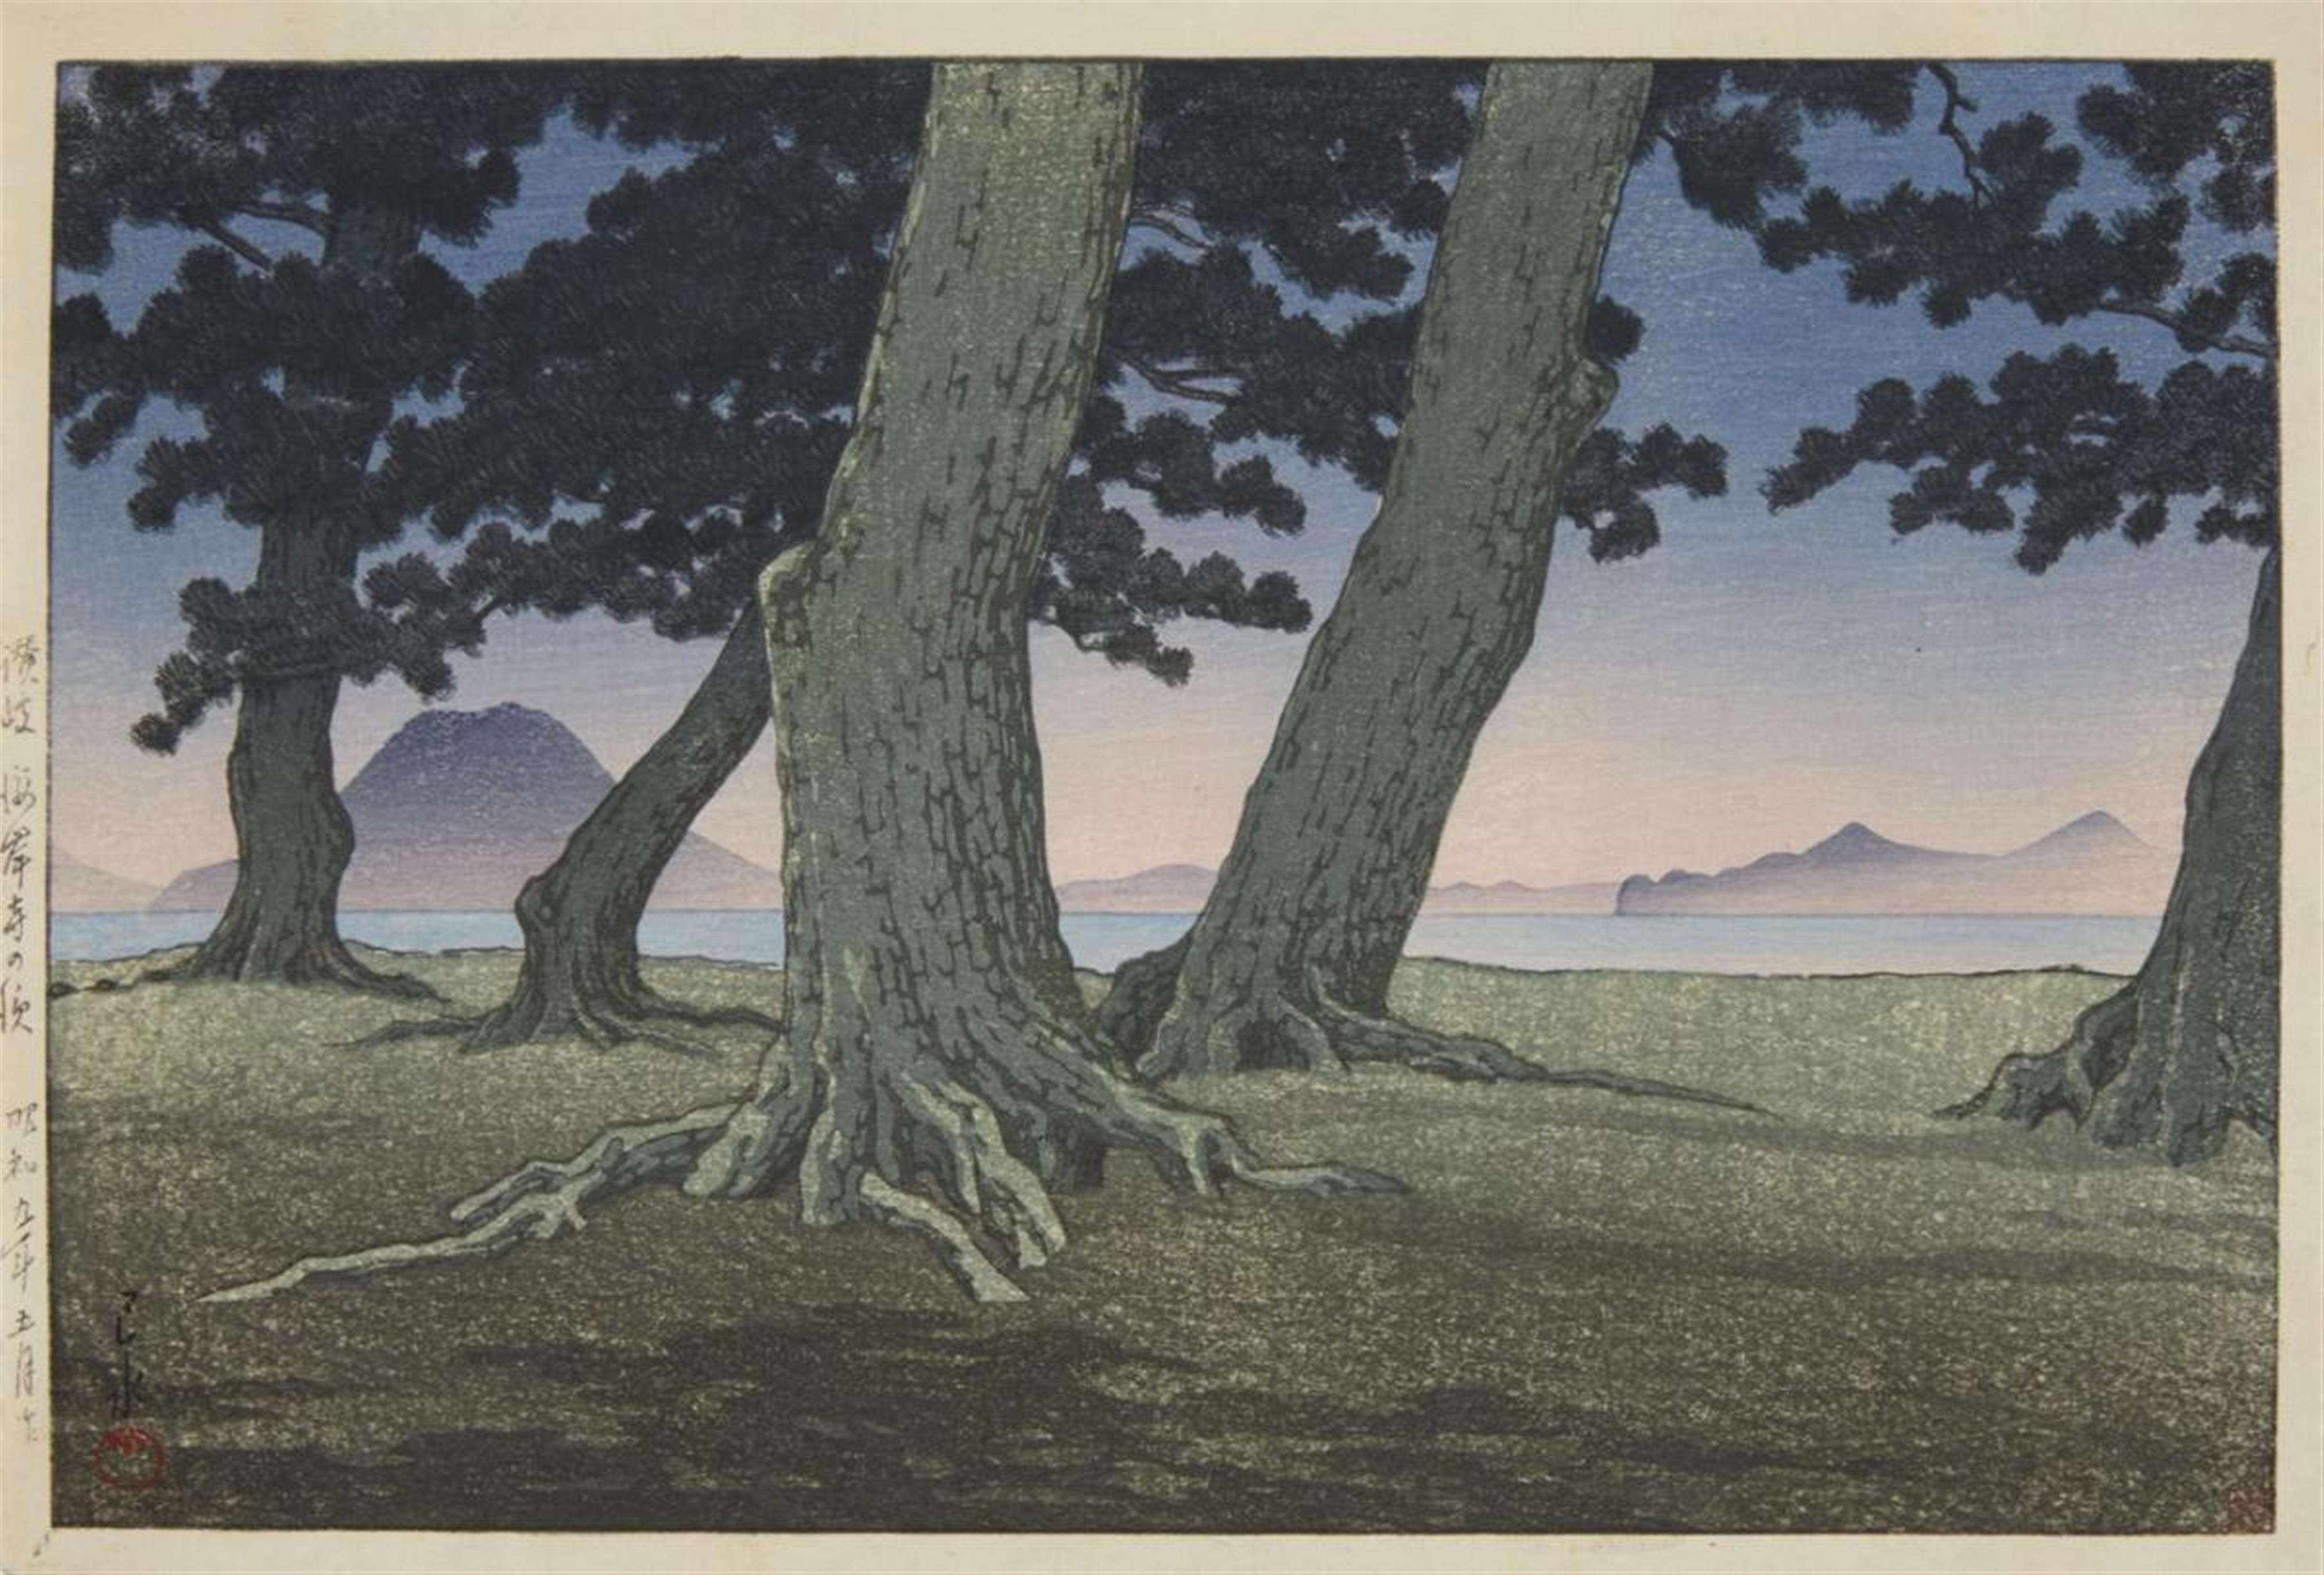 Takahashi Hiroaki, called Shotei
Kawase Hasui - Kawase Hasui (1883-1957) & Takahashi Hiroaki (Shotei) (1871-1945) - image-3